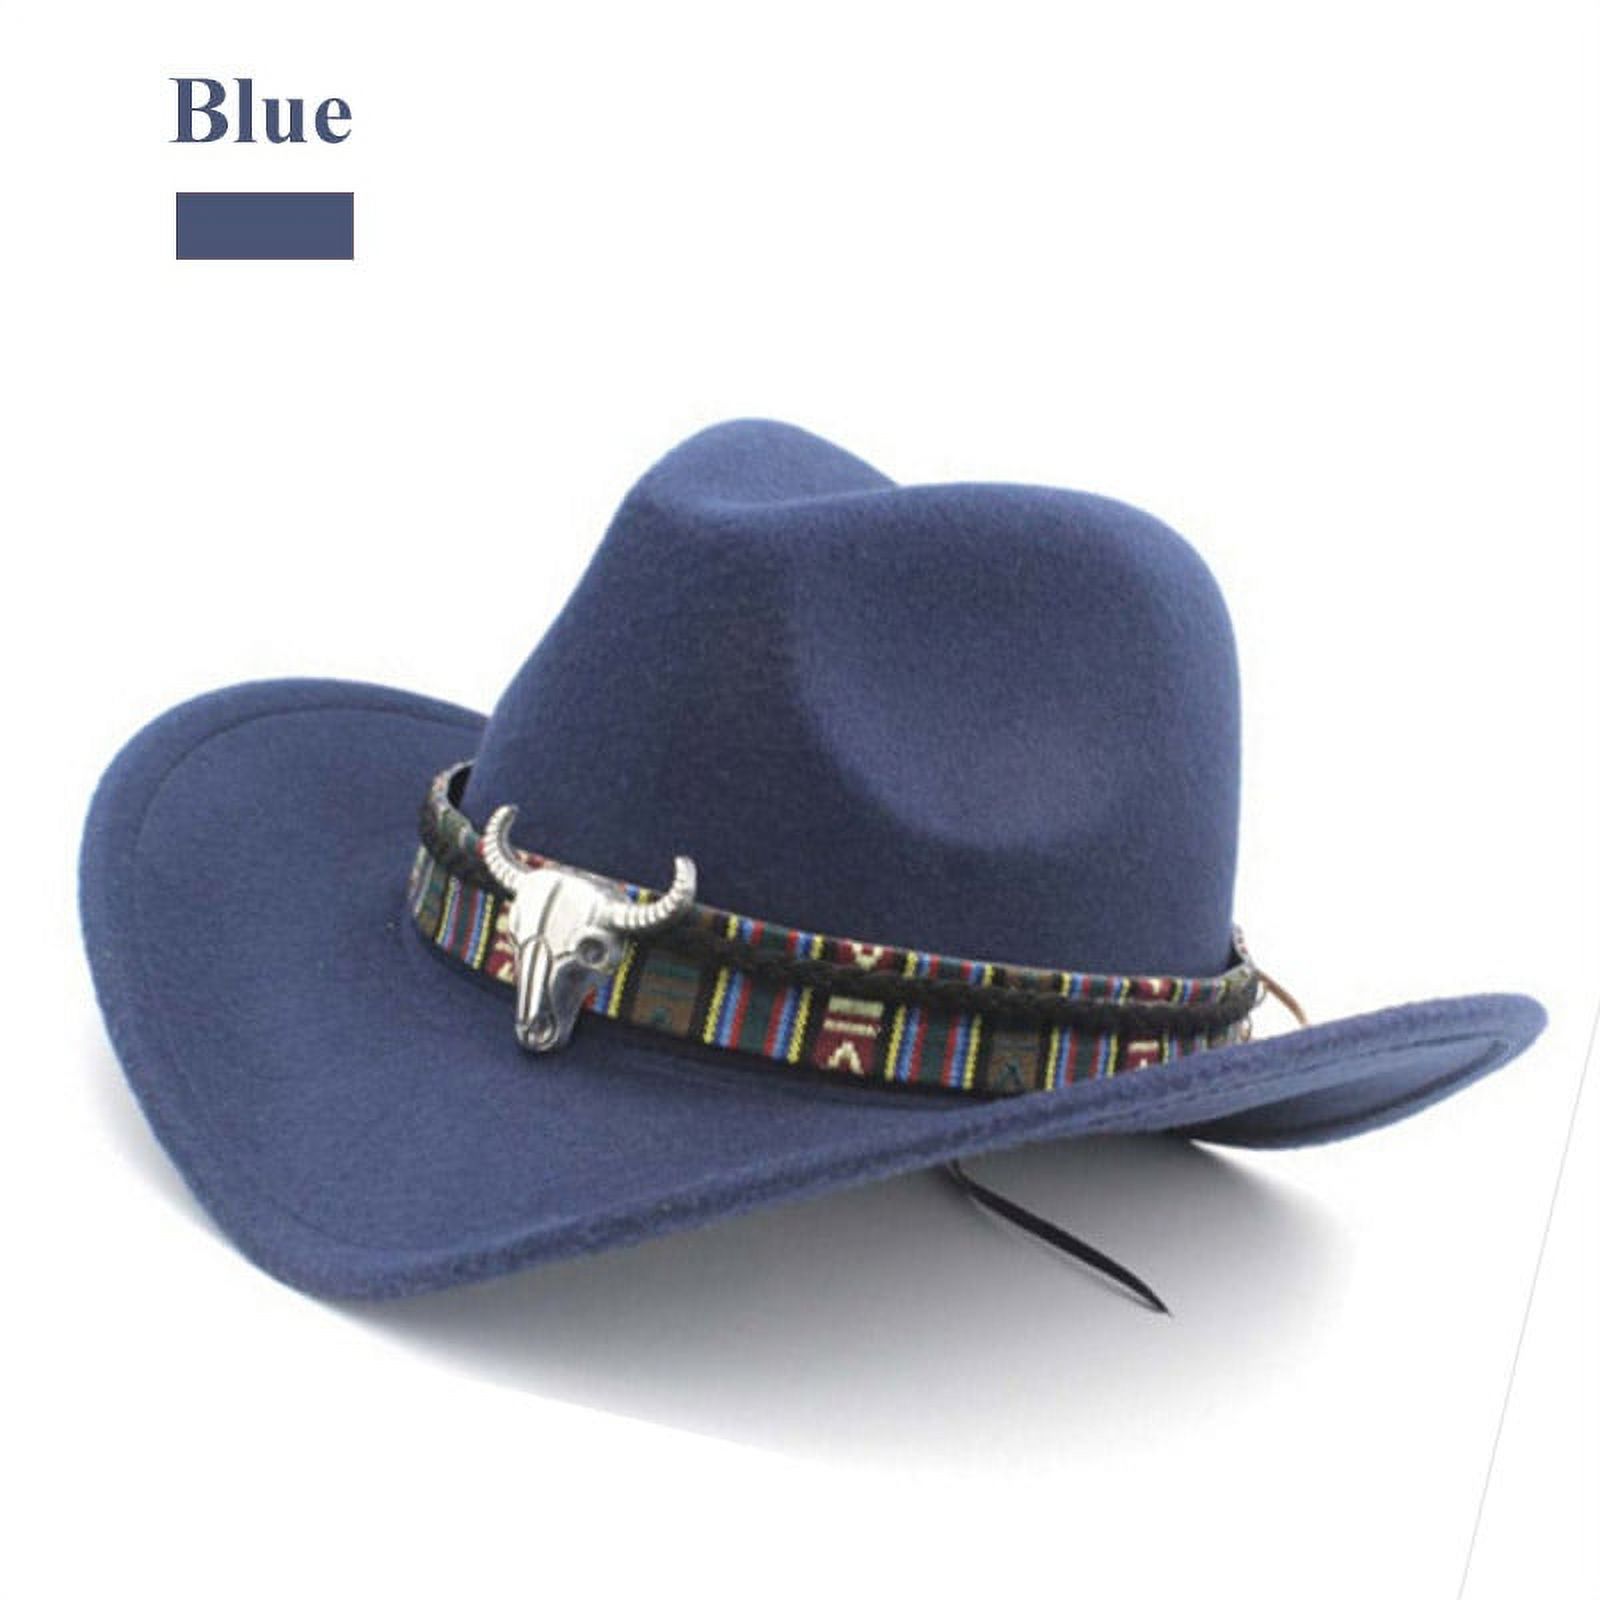 FANTADOOL Cowboy Hat for Men Faux Felt Western Outdoor Wide Brim Hat with Strap Jazz Hat Wide Brim Panama Cowboy Hats Floppy Sun Hat for Beach Church Blue - image 1 of 3